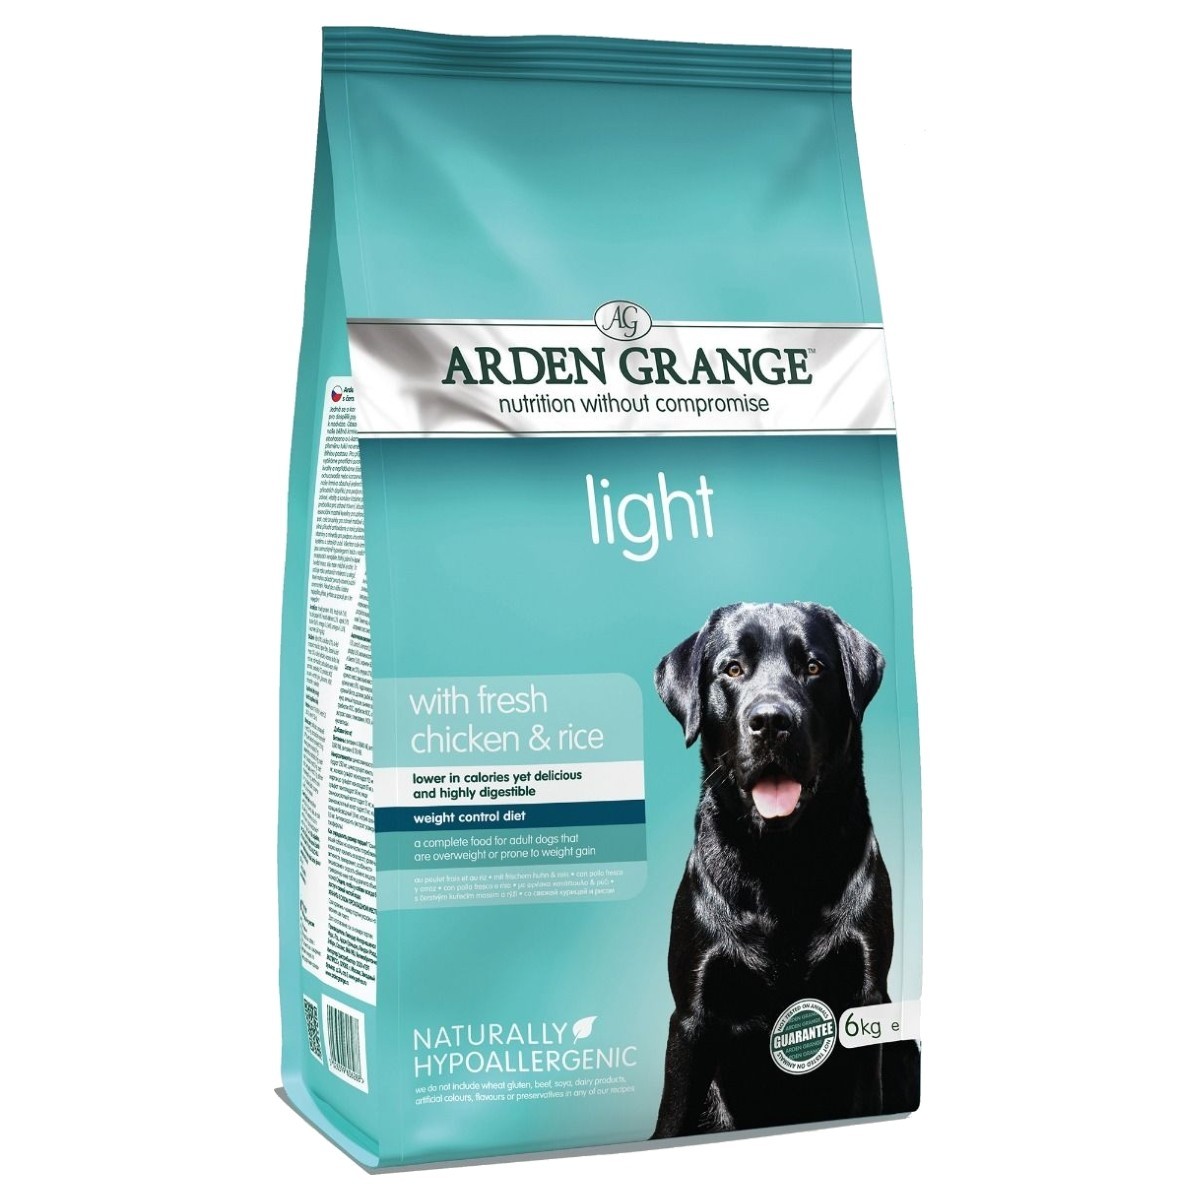 Корма для собак беларусь. Корм для собак Арден Грендж. Корм Arden Grange. Senior&Light sensitive (Arden Grange для чувствительных пожилых собак). Arden Grange sensitive для собак.